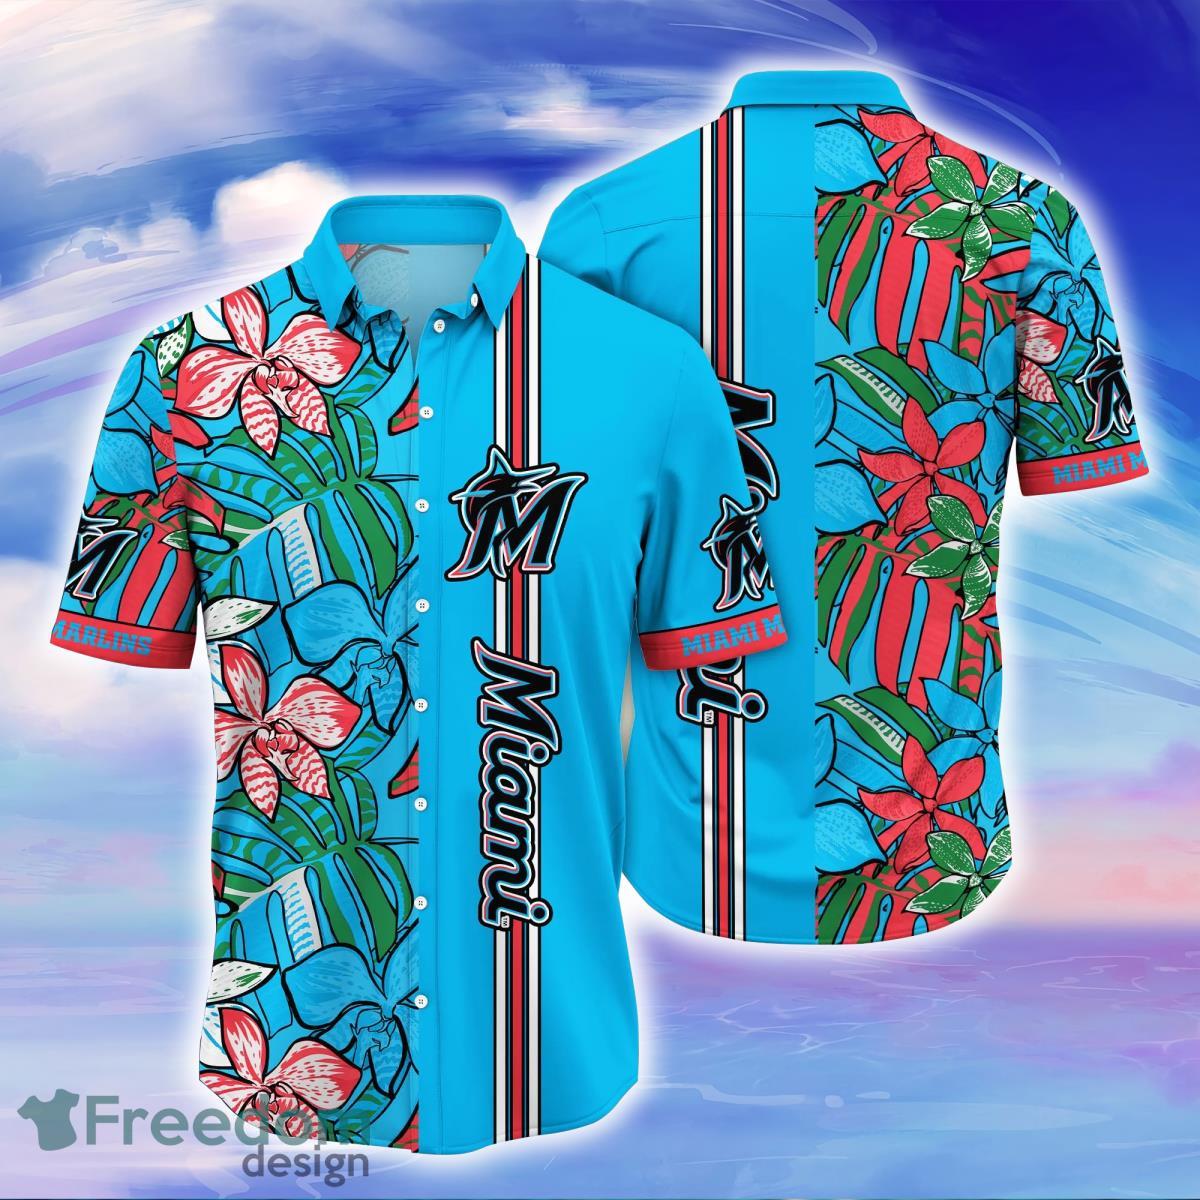 Miami Vice Custom Jerseys, Jackets, Hoodies, and Shirts